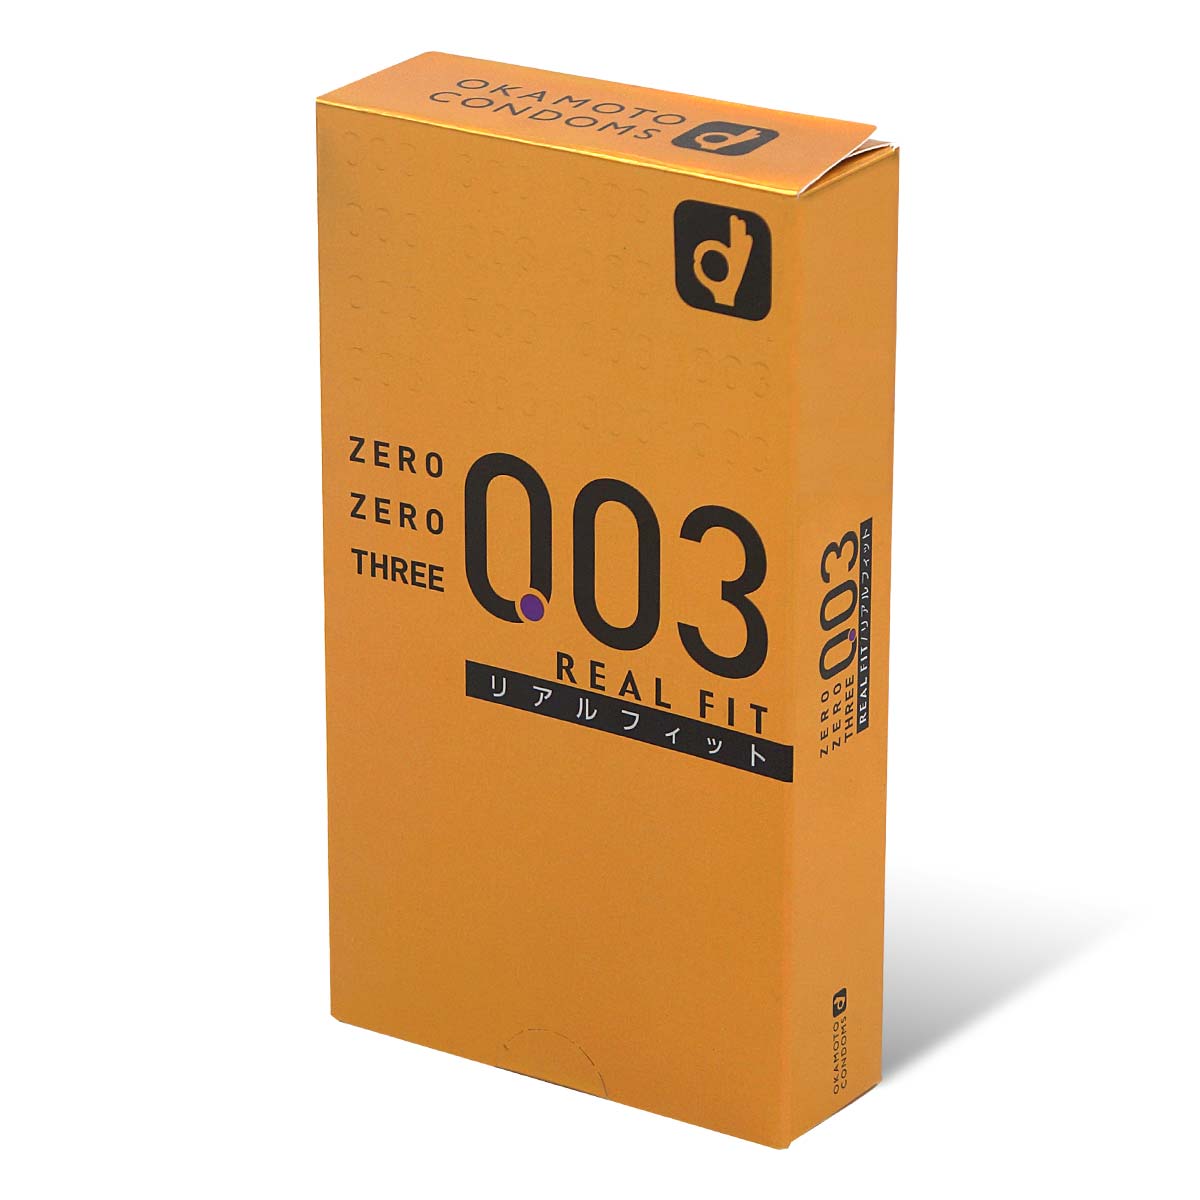 Zero Zero Three 0.03 Real Fit (Japan Edition) 10's Pack Latex Condom-thumb